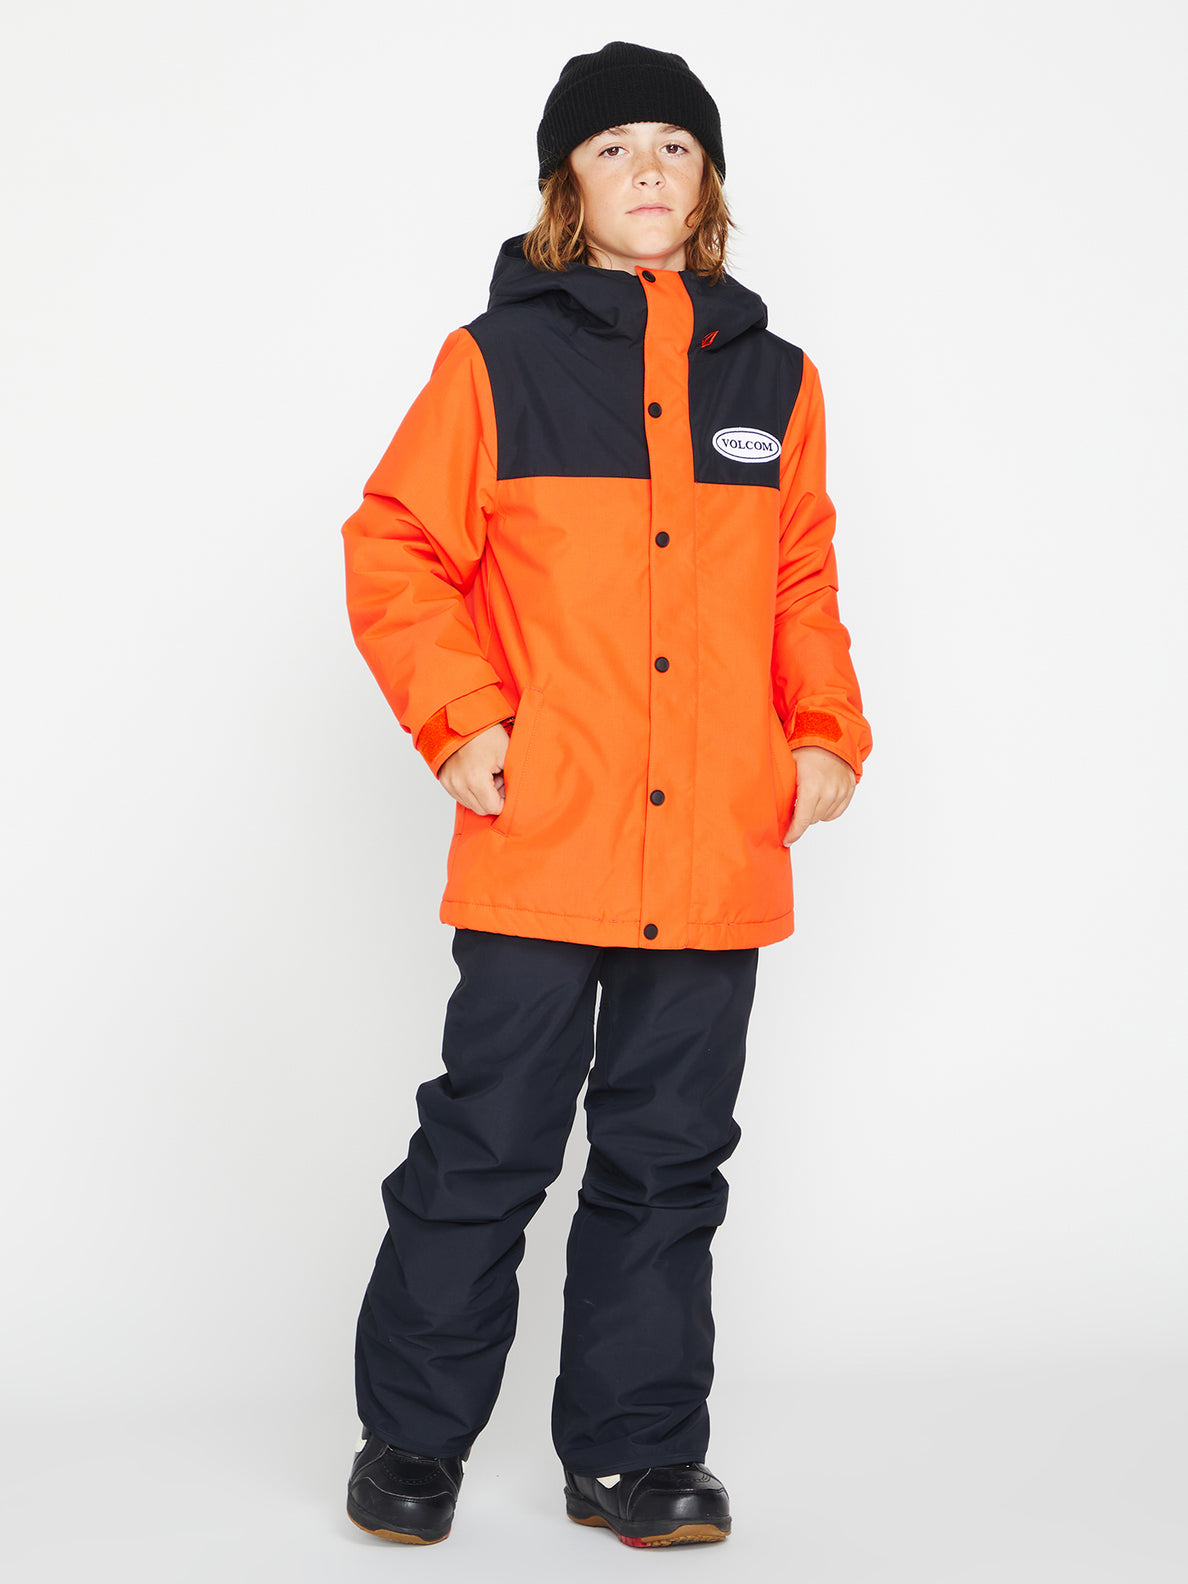 Stone.91 Insulated Jacket - (Kids) Orange Shock Europe – Volcom 